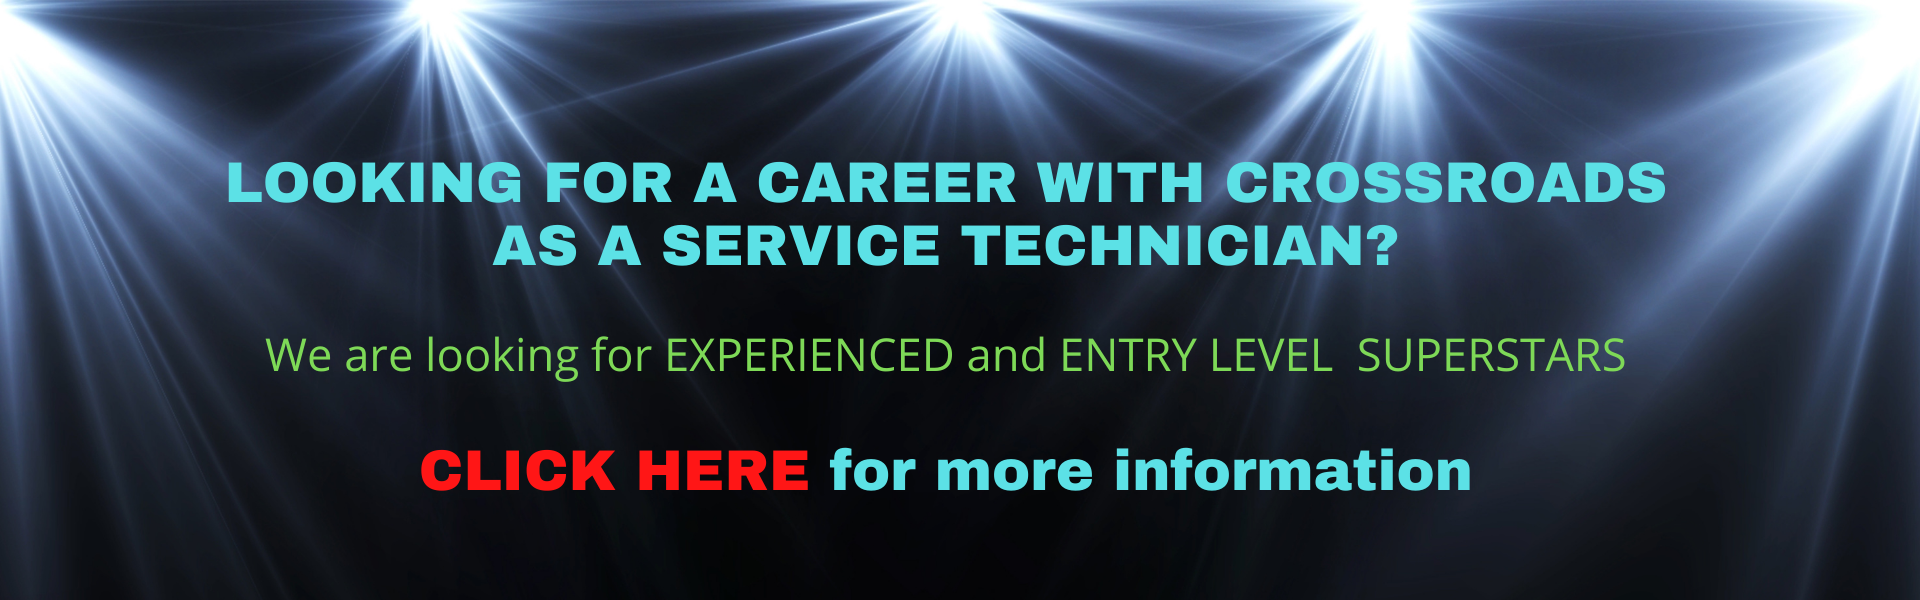 Servie Technicians - Apply HERE